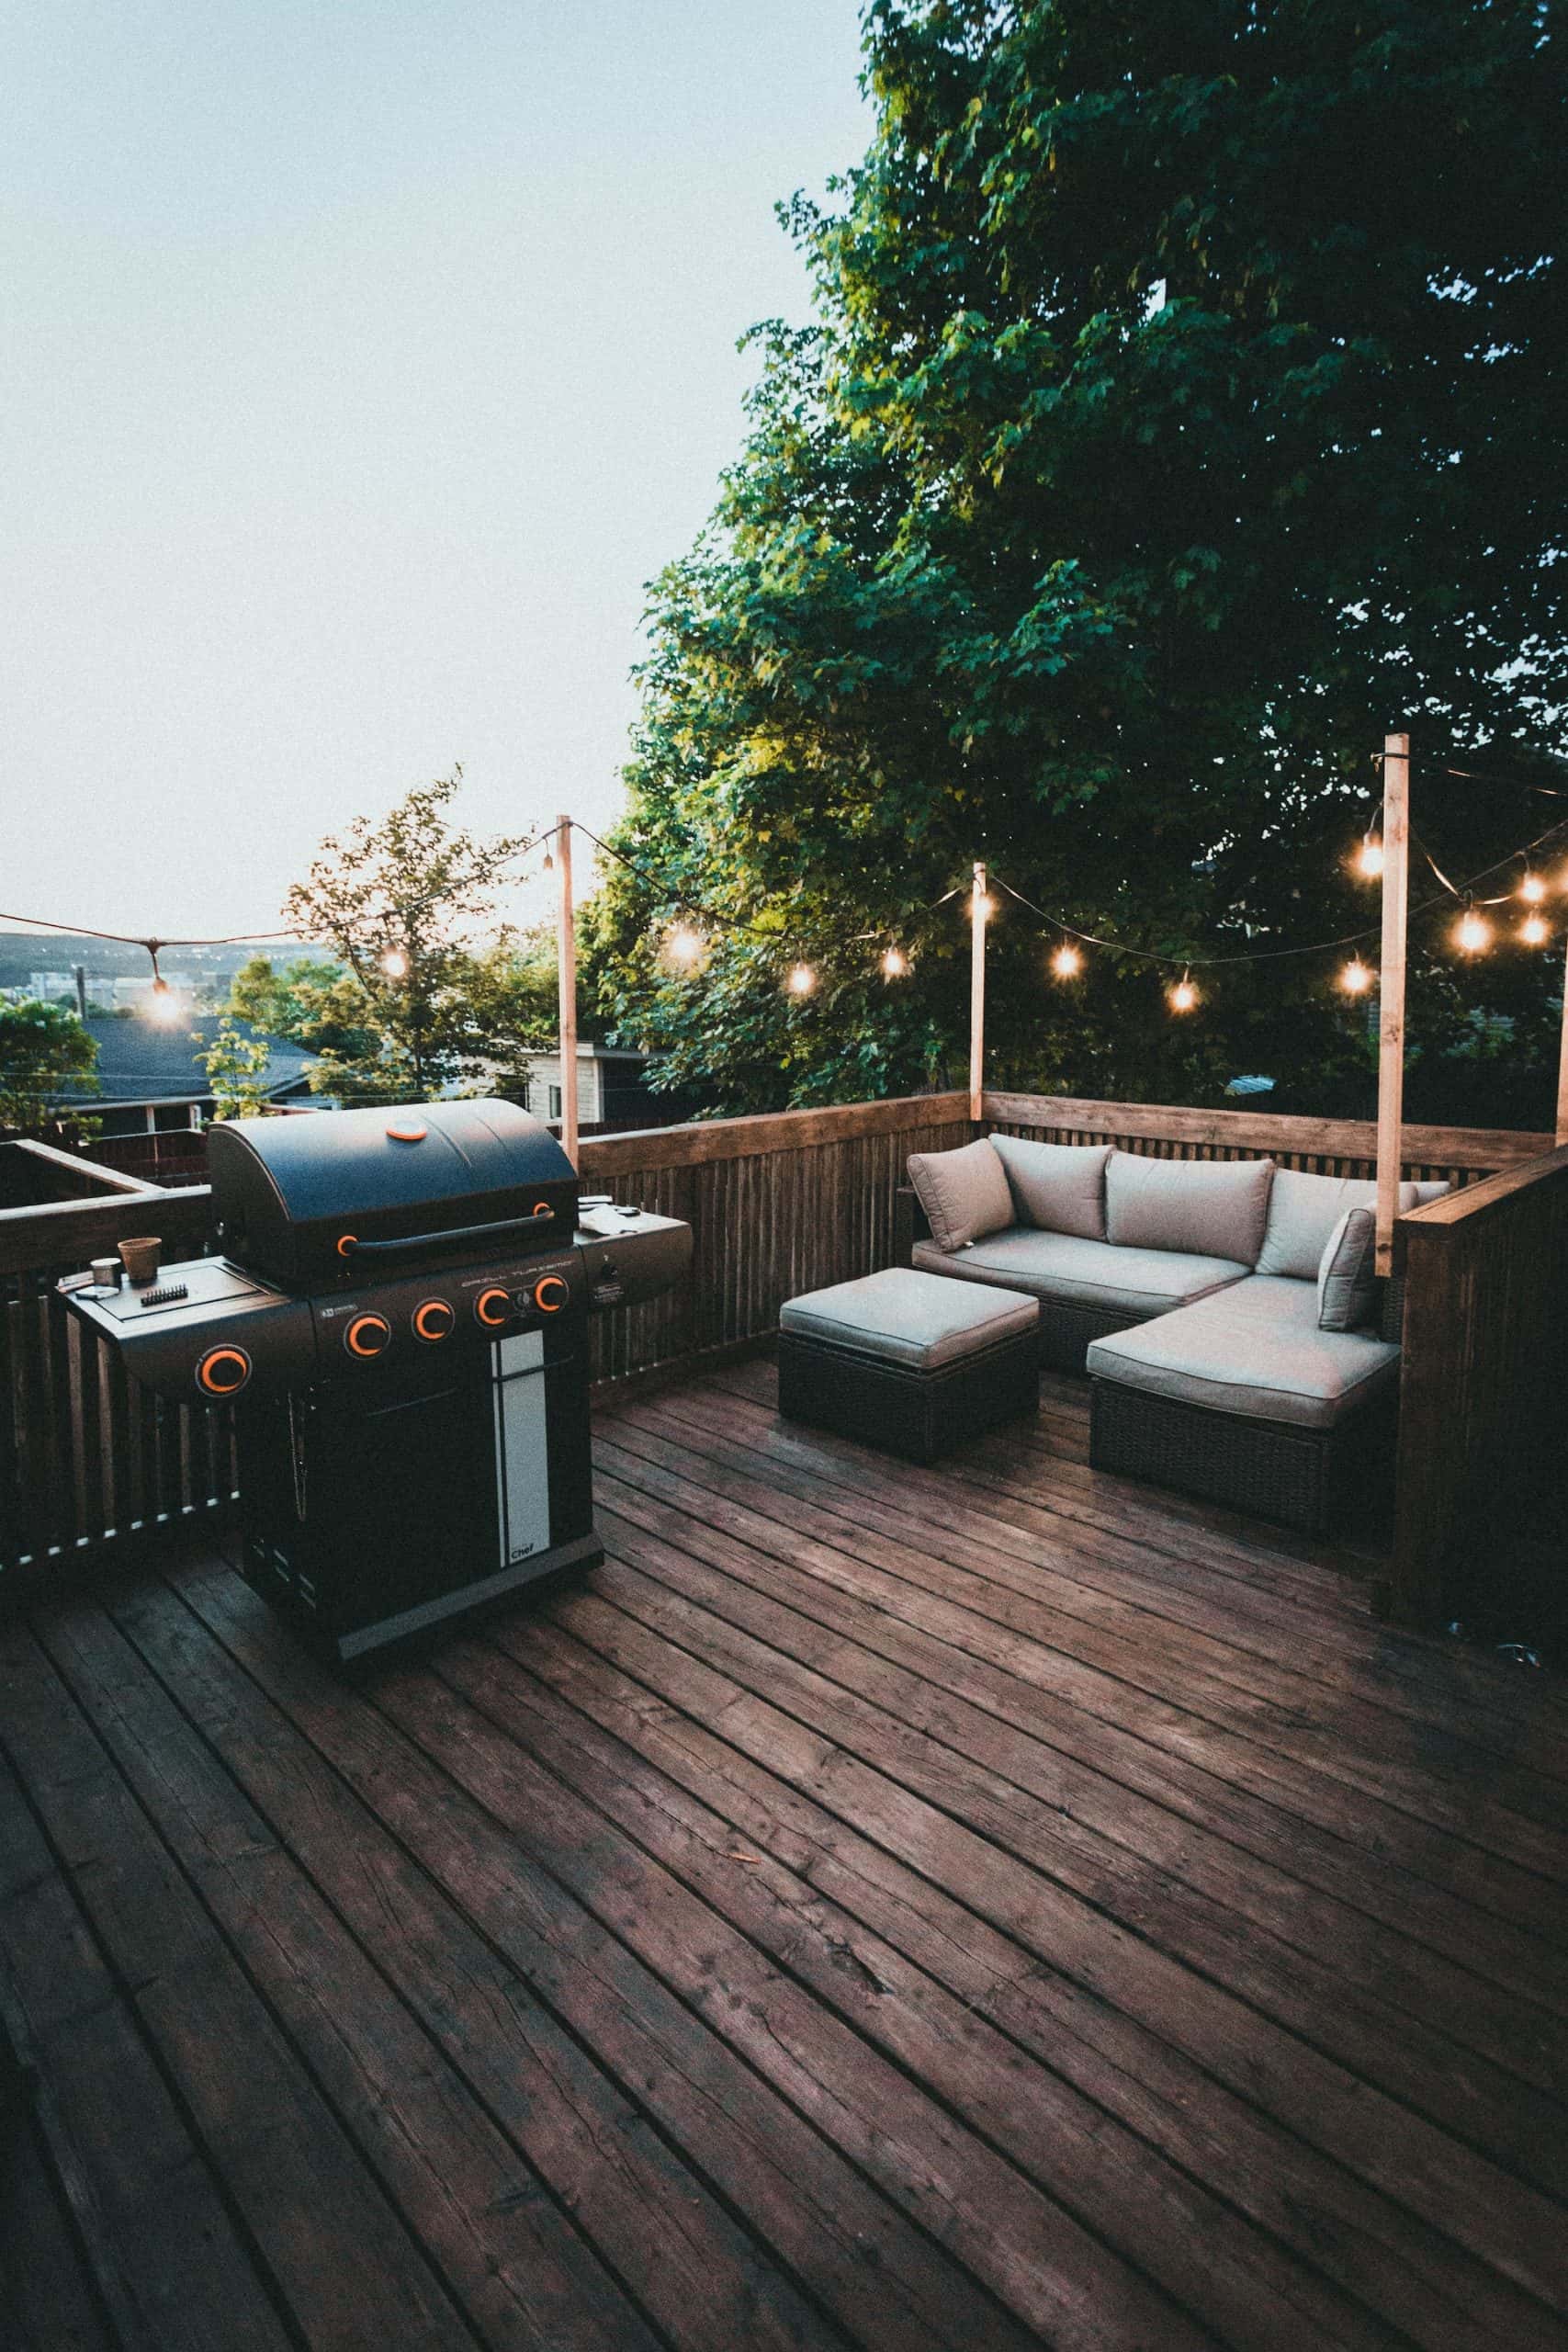 open terrace design for parties